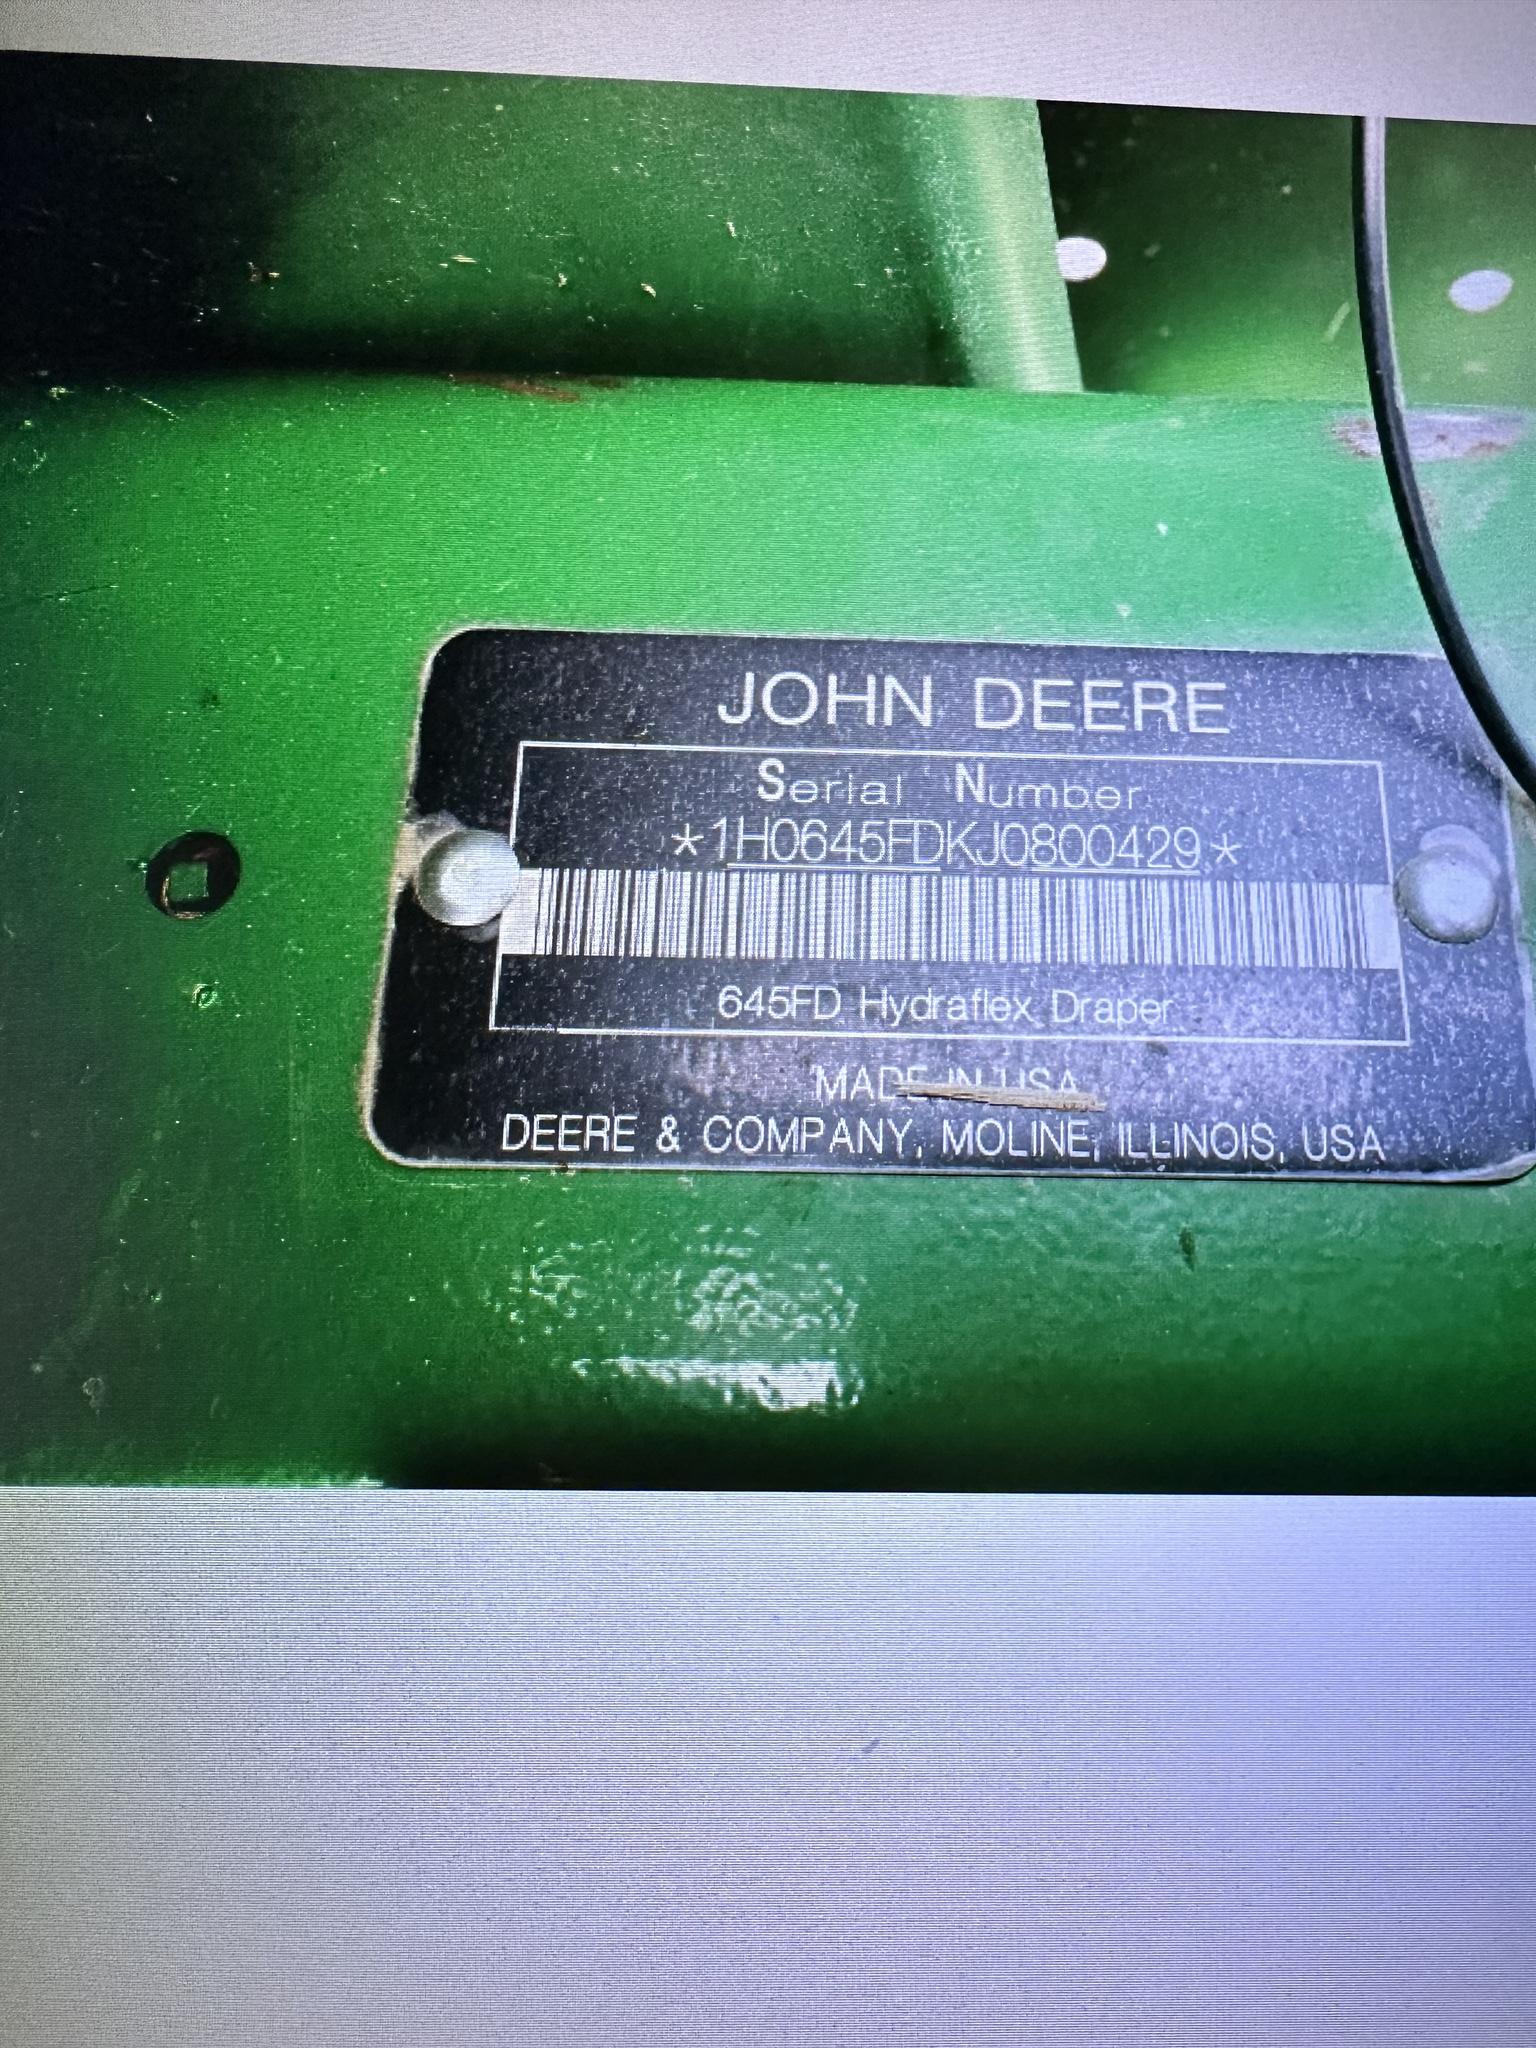 2018 John Deere 645FD